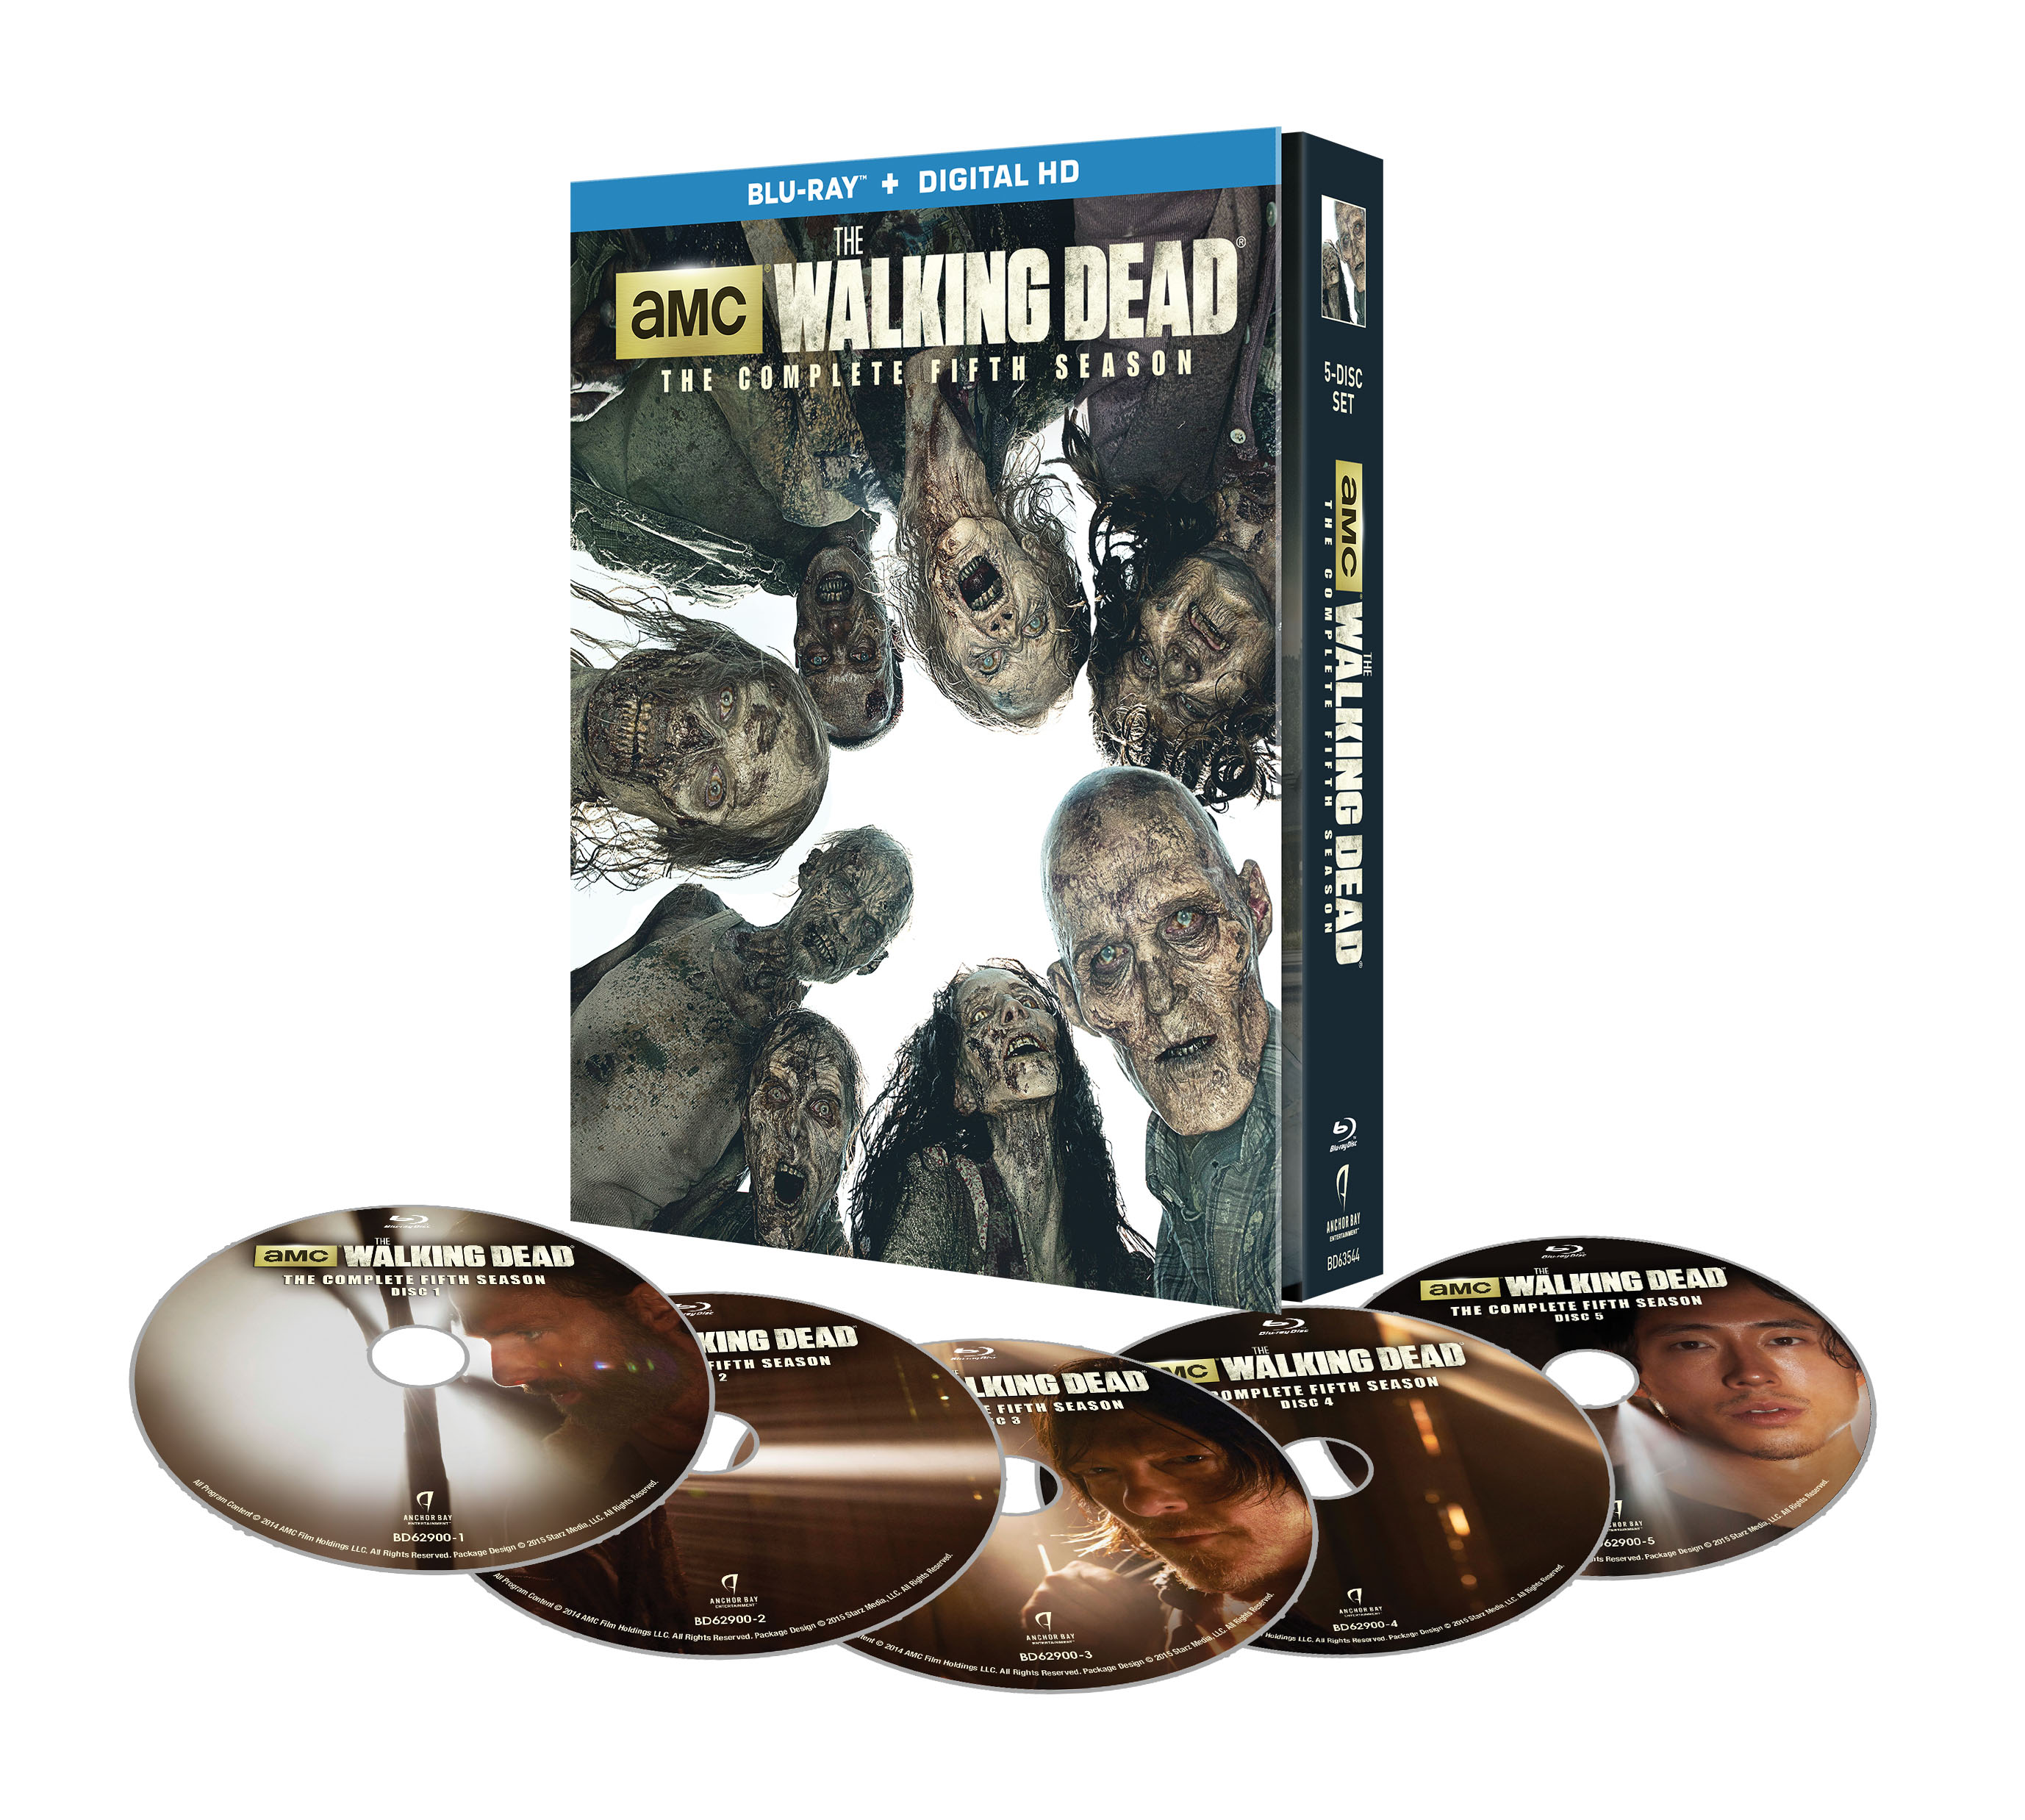 'The Walking Dead' Season 5 Limited Edition Discs